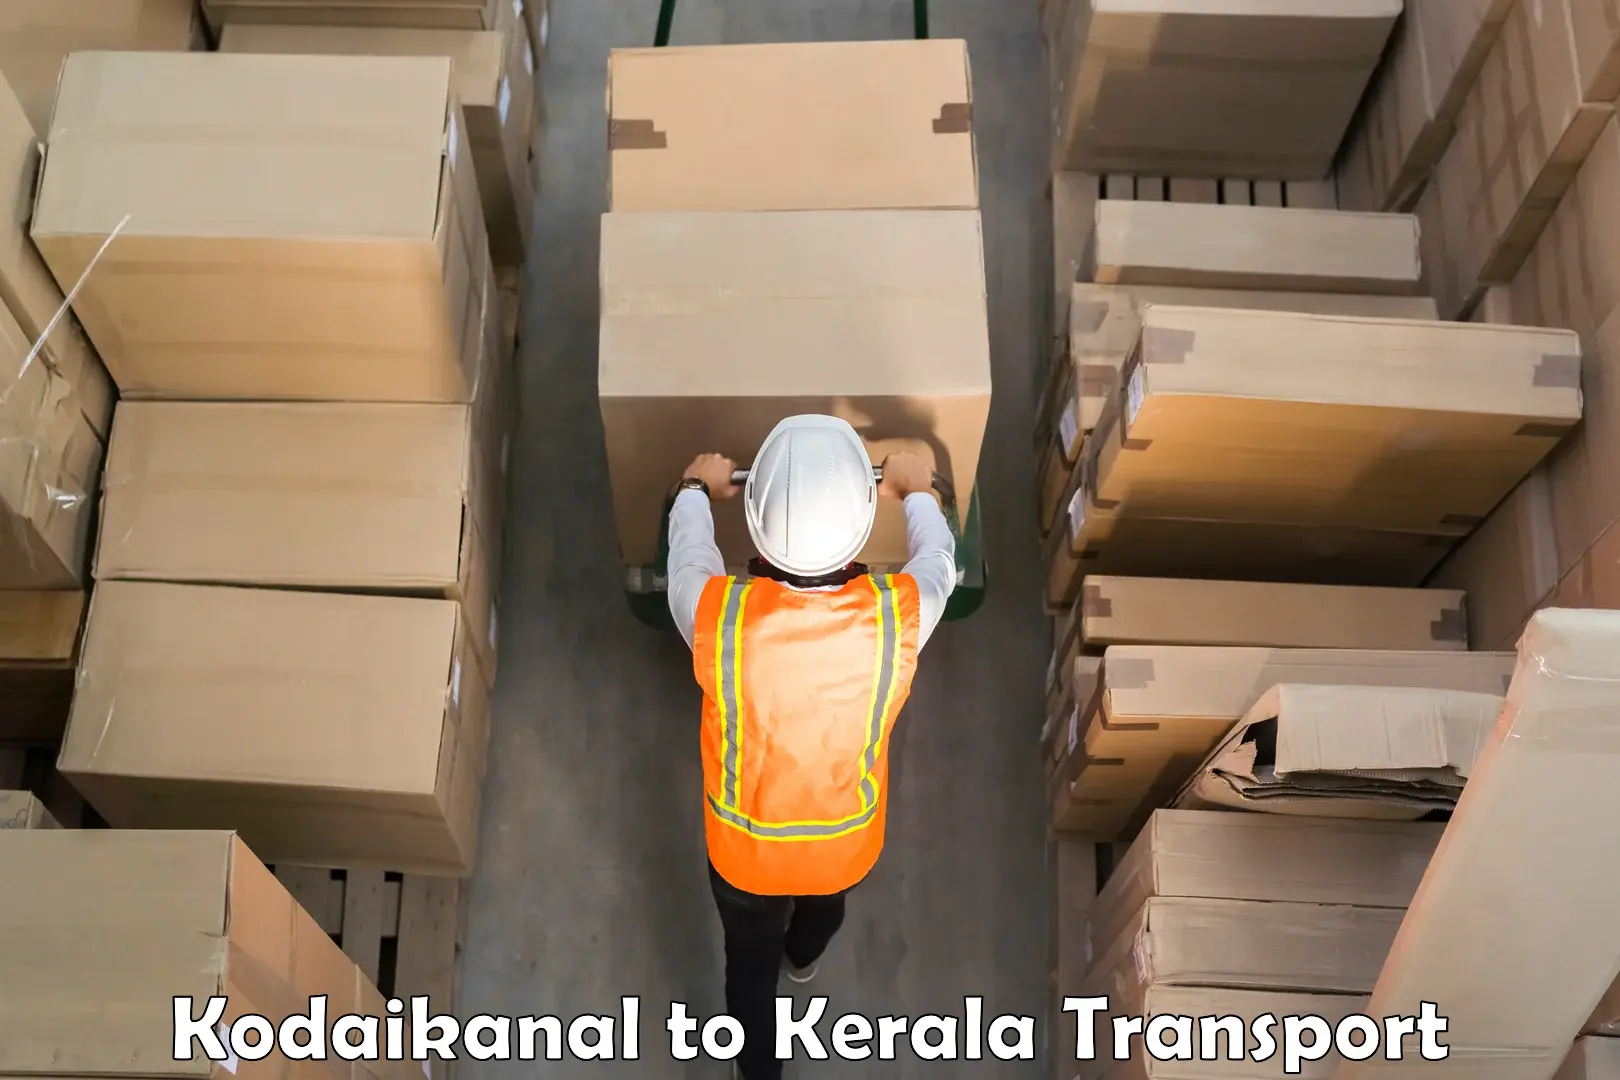 Transport in sharing Kodaikanal to Kochi